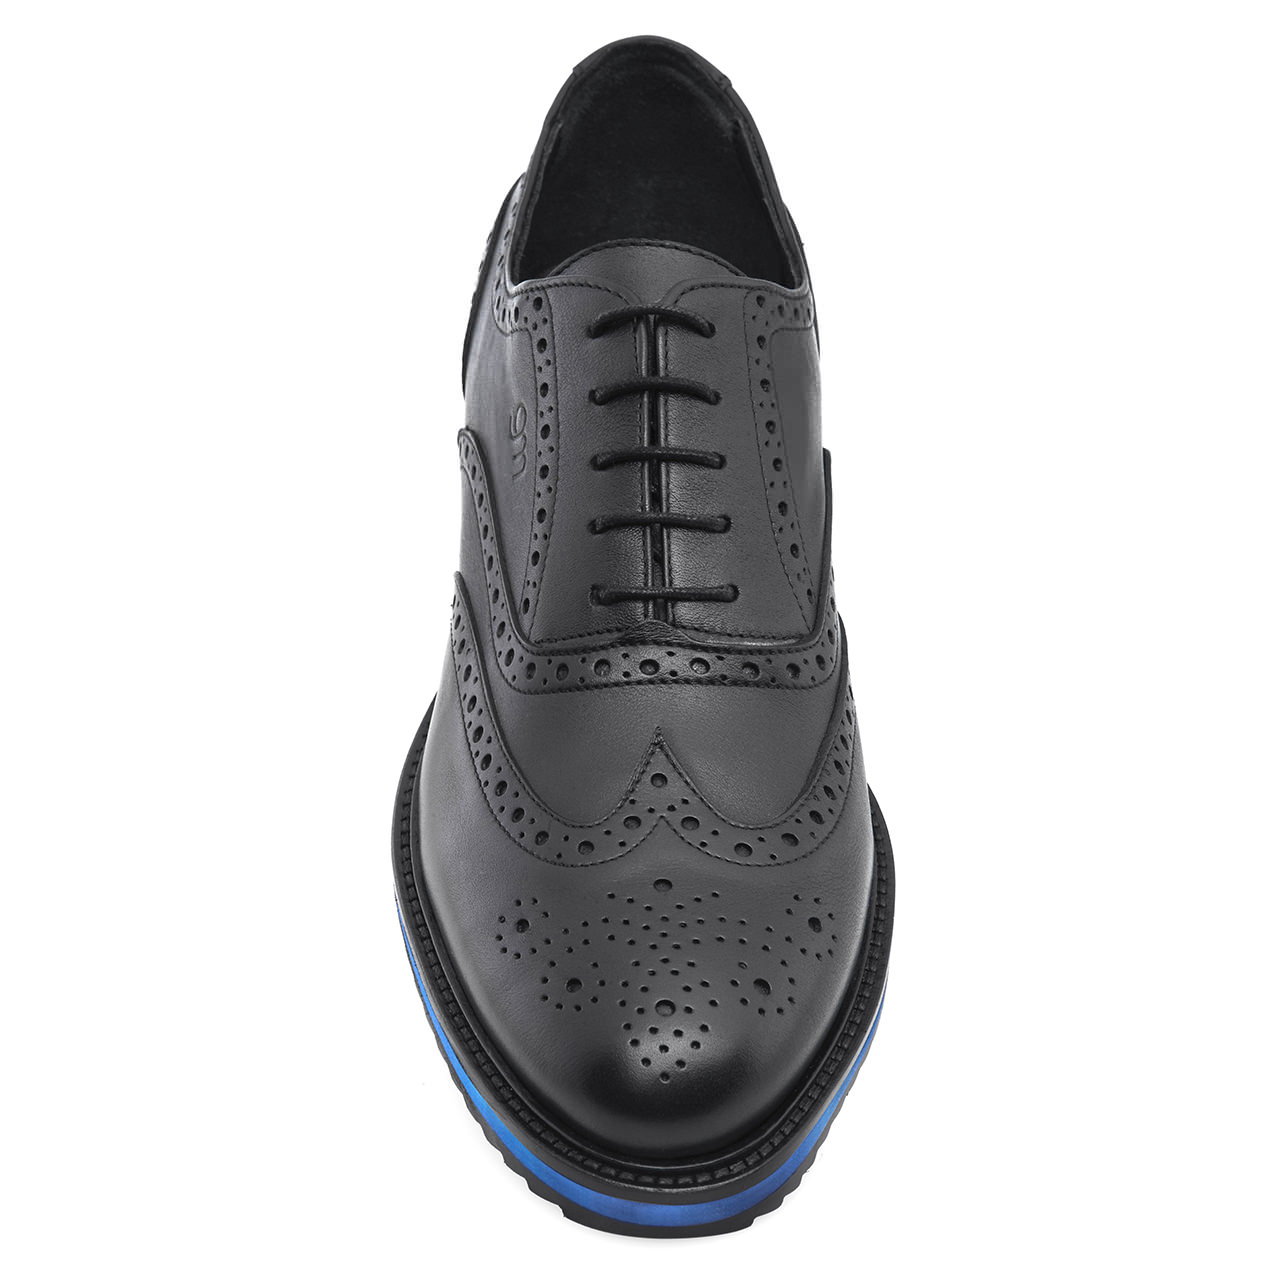 Geneve - Elevator shoes for men | Guidomaggi